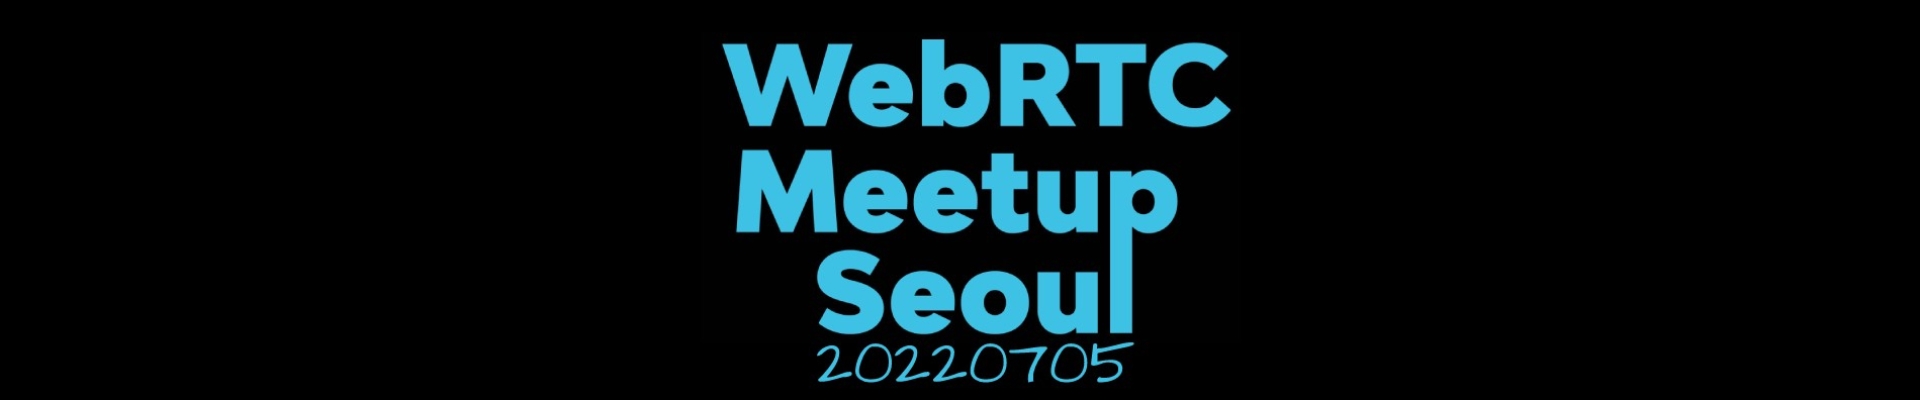 WebRTC 밋업 서울 202207